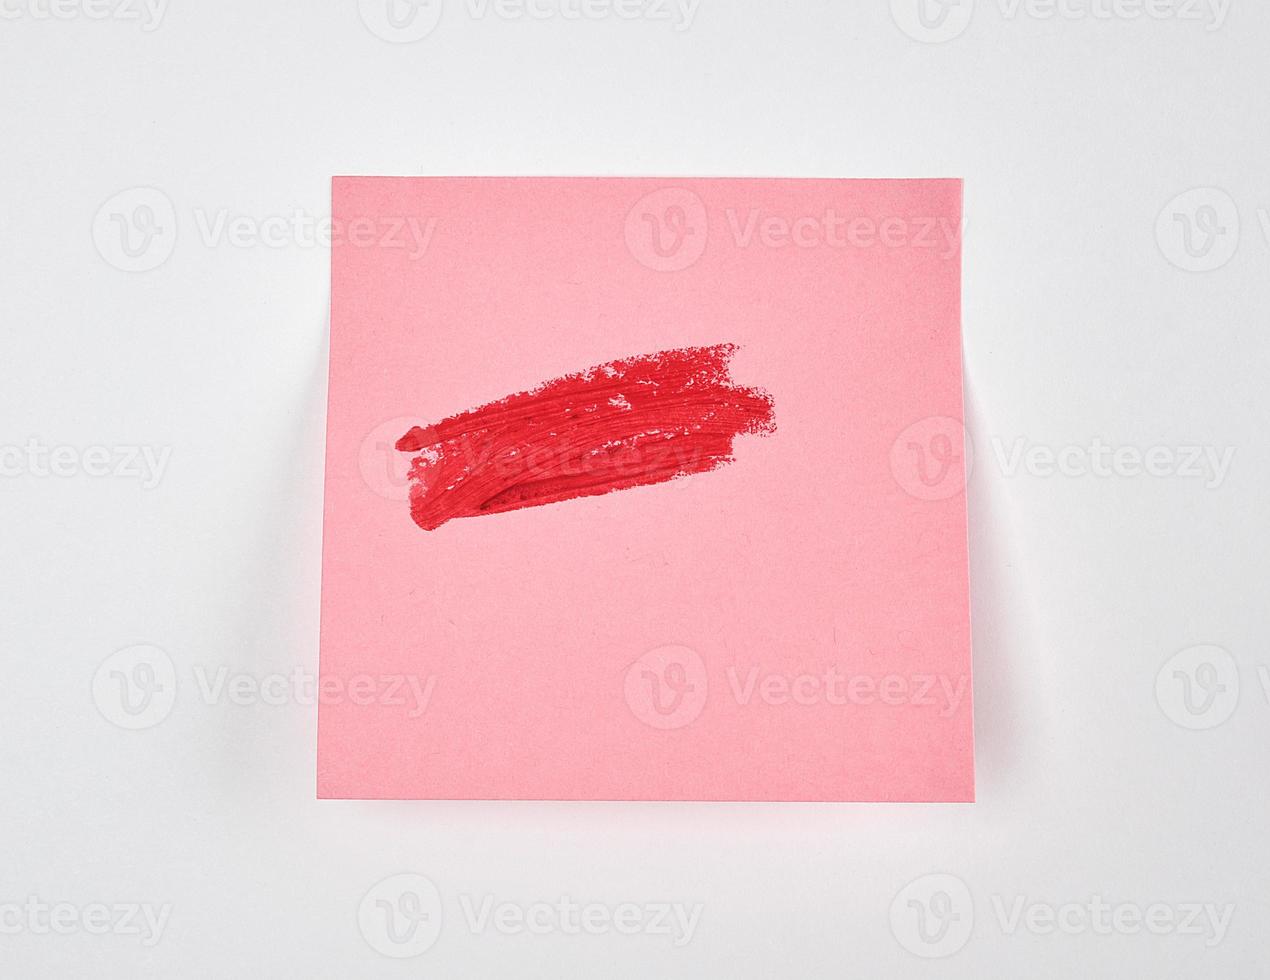 manchas de lápiz labial rojo en una pegatina de papel rosa foto